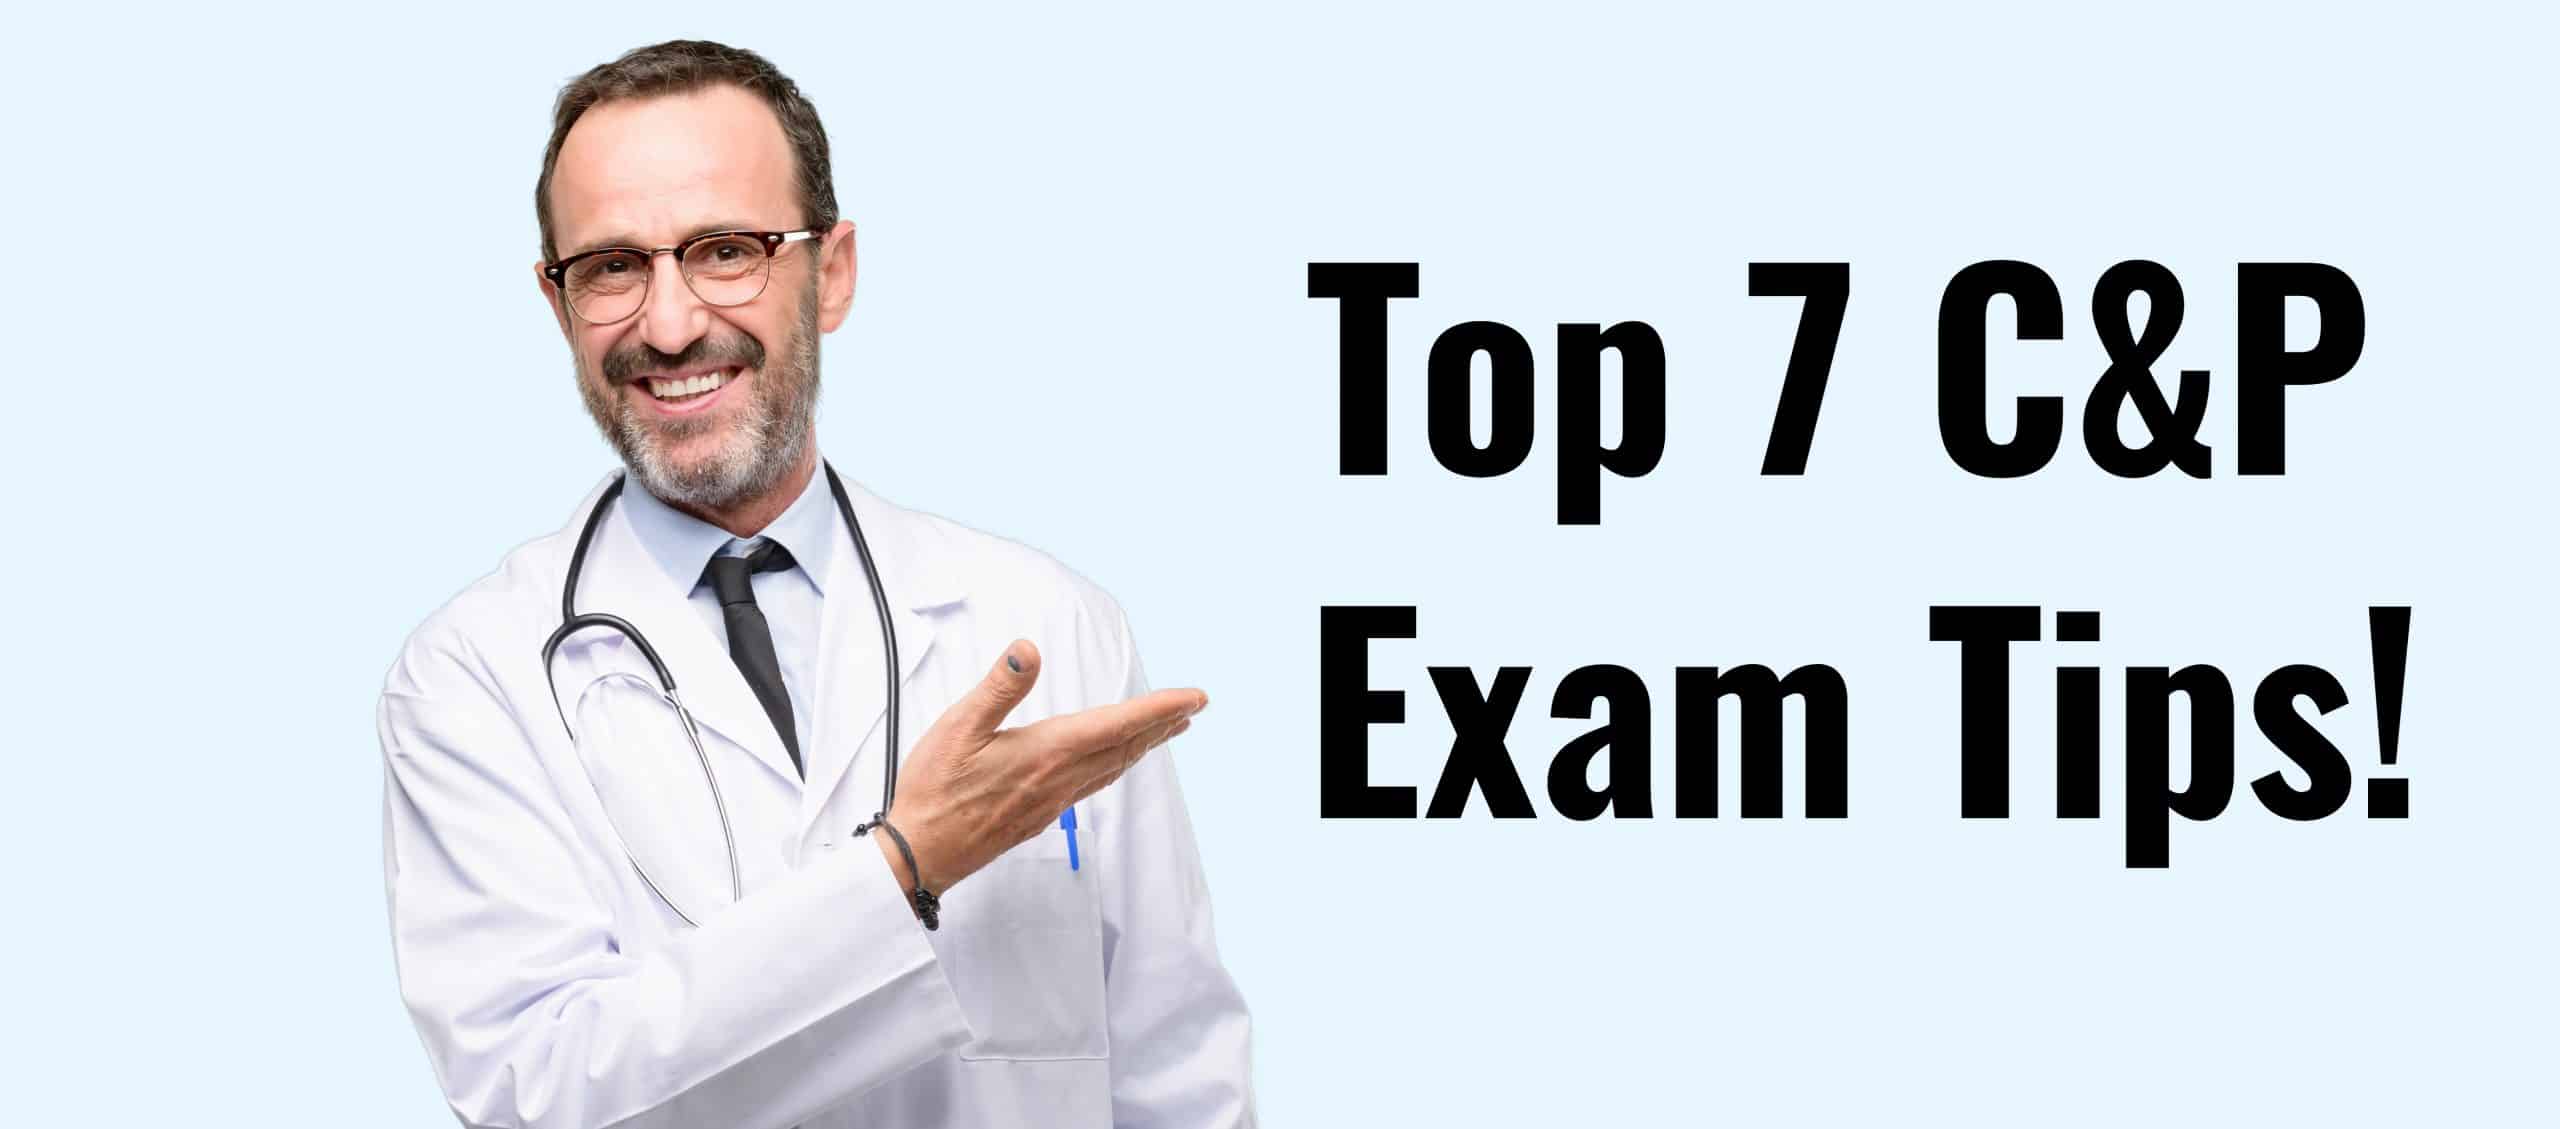 Top 7 C&P Exam Tips